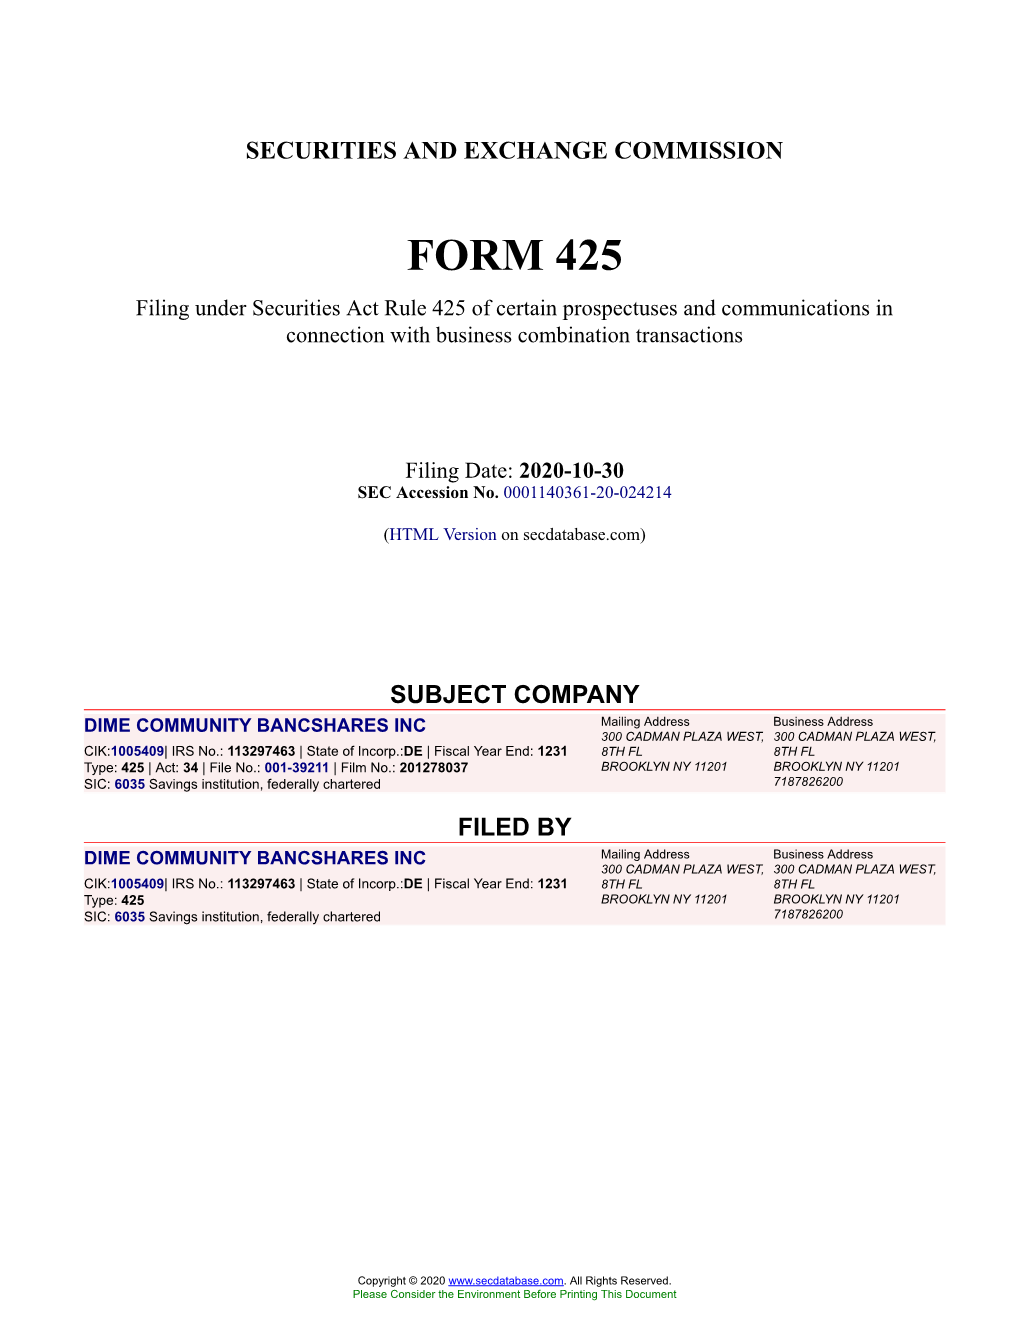 DIME COMMUNITY BANCSHARES INC Form 425 Filed 2020-10-30